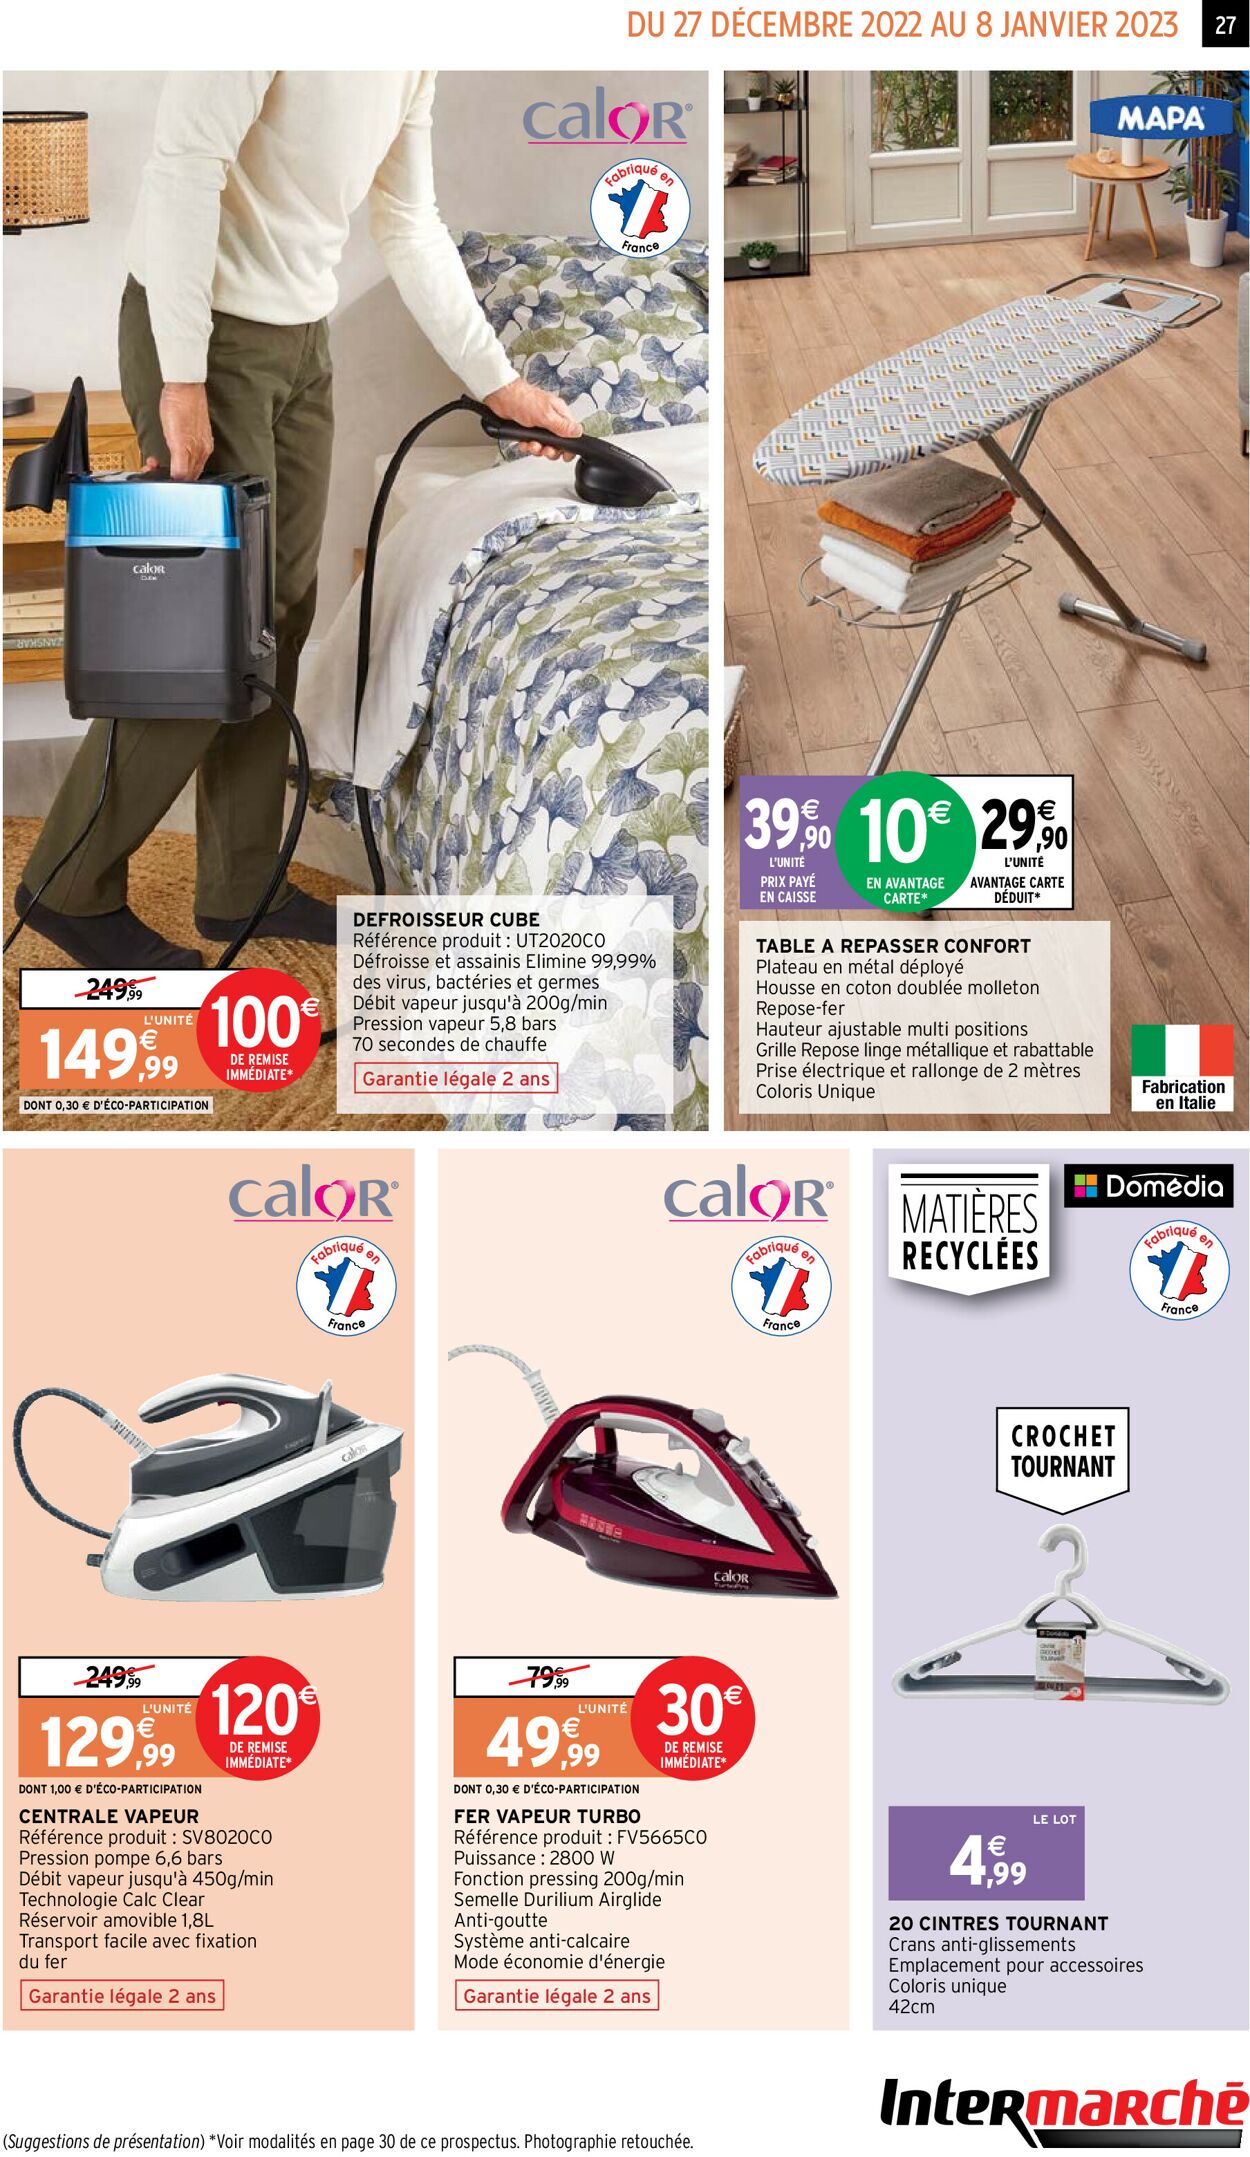 Intermarché Catalogue - 27.12-08.01.2023 (Page 27)